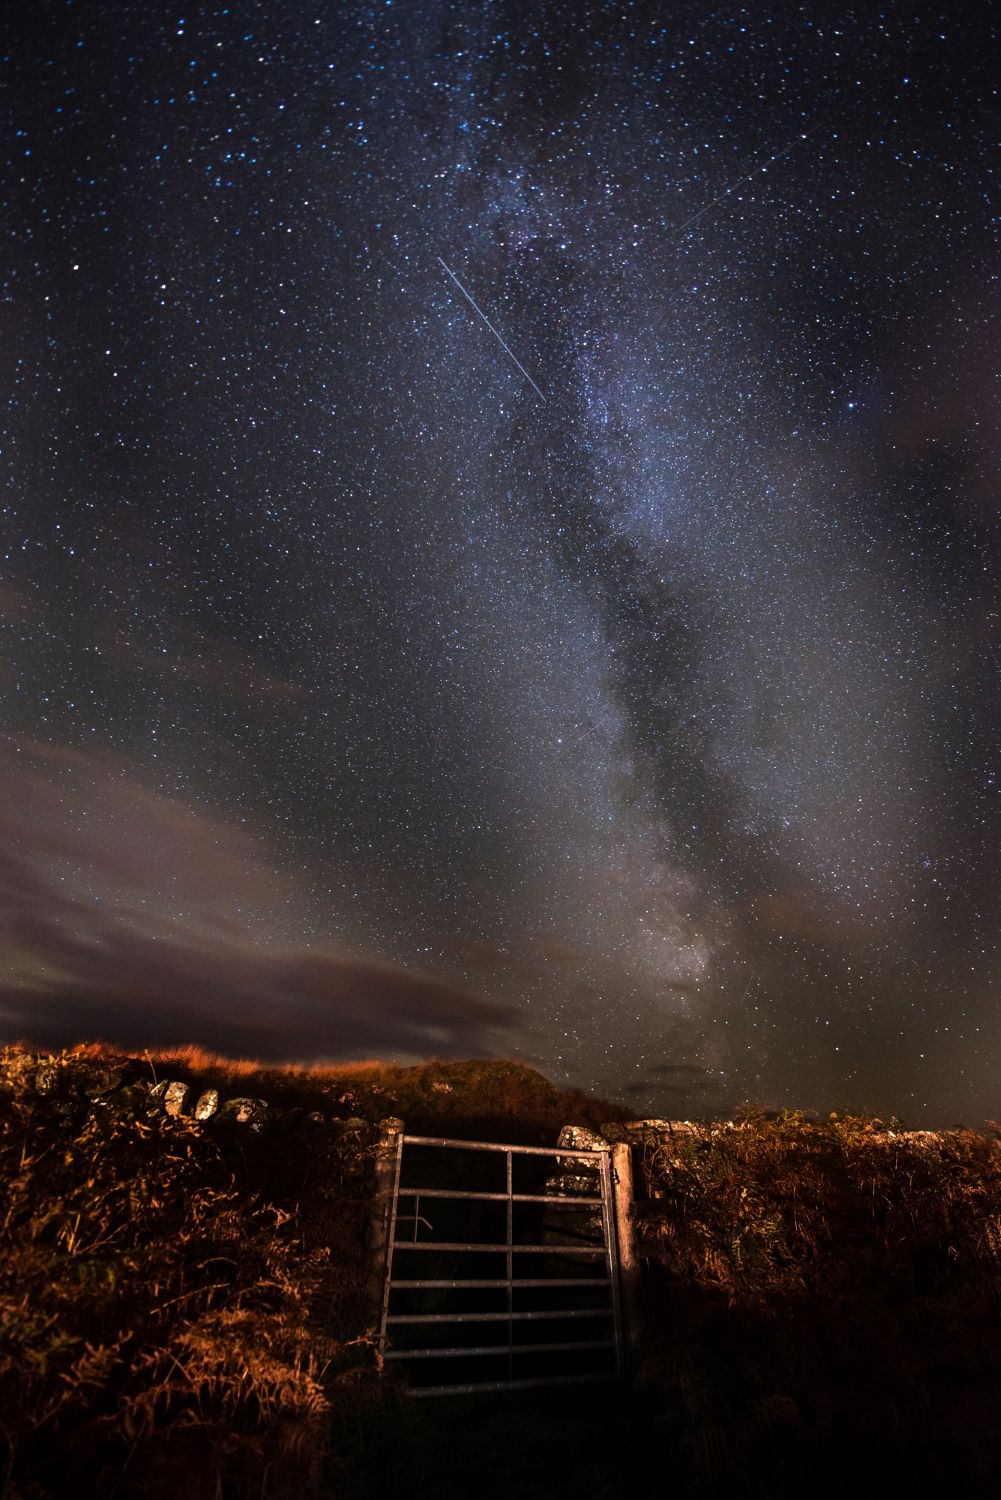 Orinoid meteor shower seen above a farm field